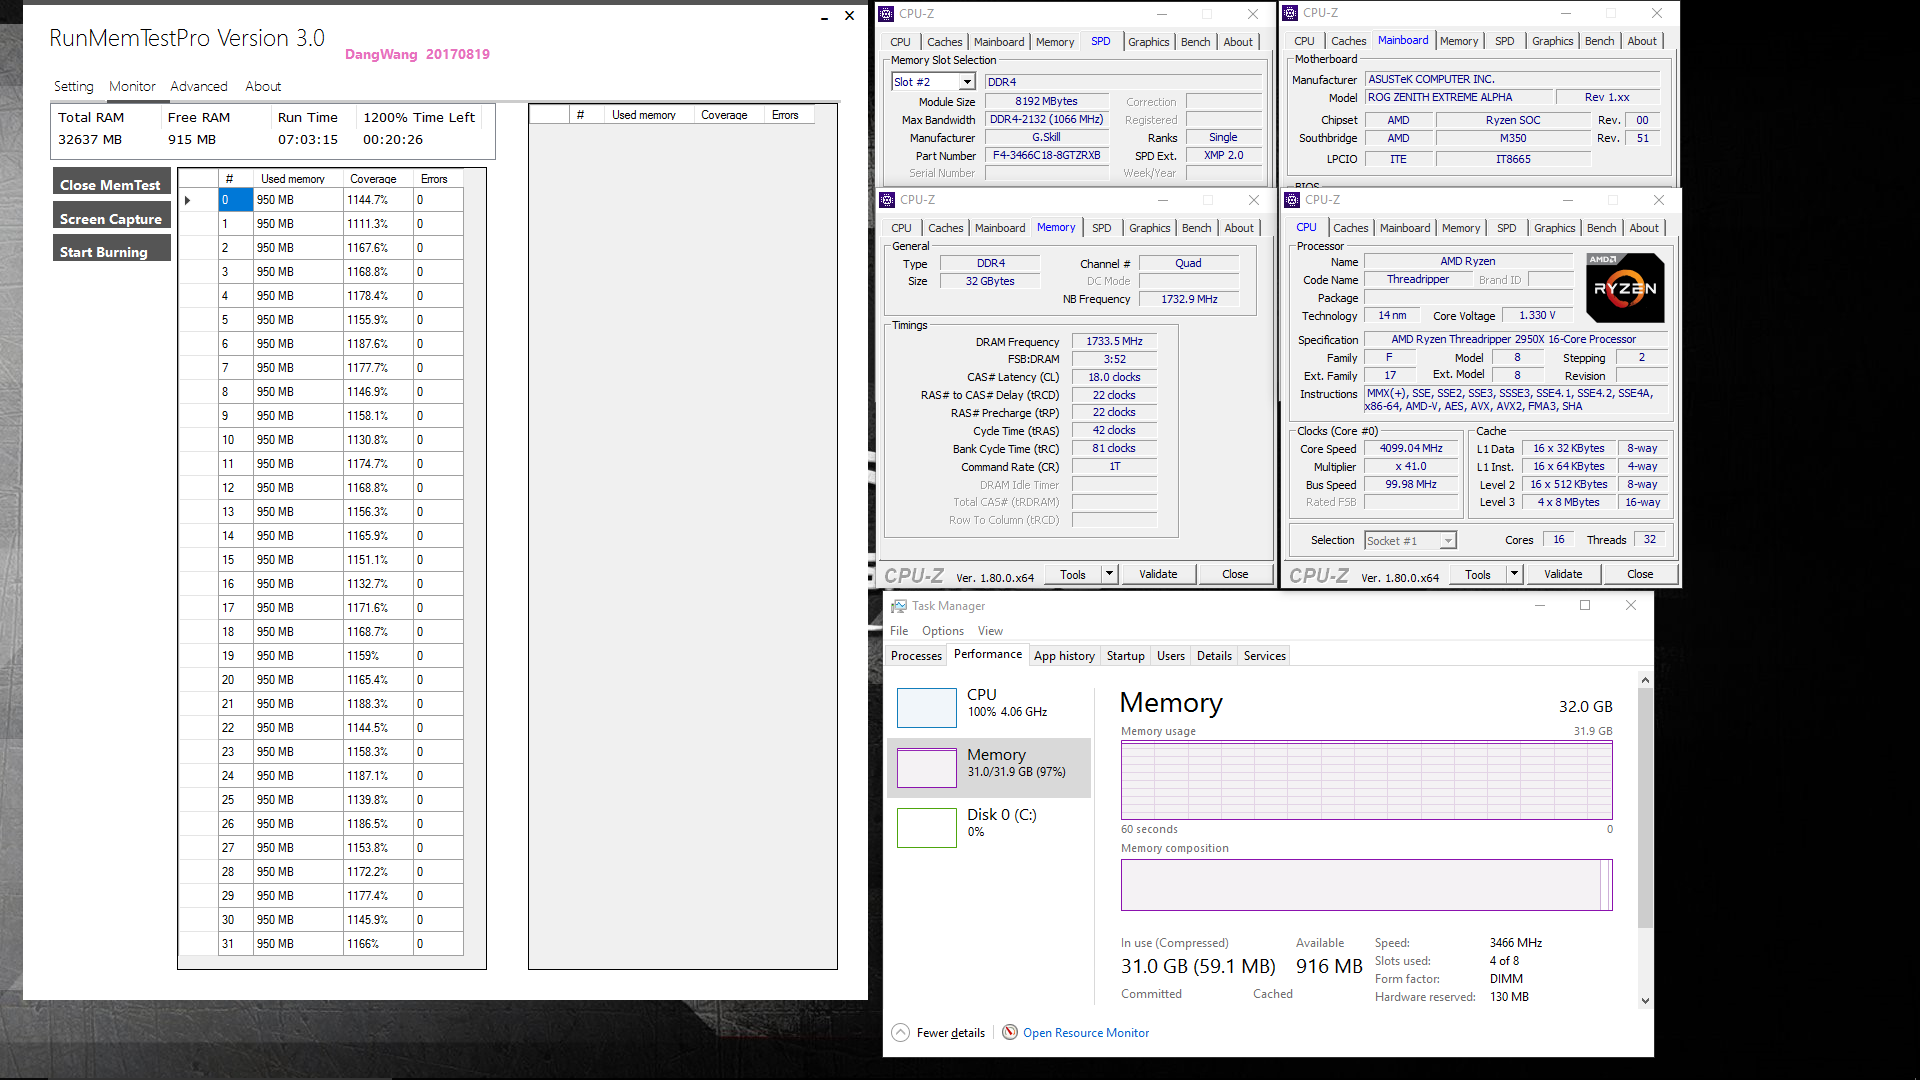 02 3466cl18 validation G.SKILL เปิดตัวแรมรุ่นใหม่ล่าสุด Trident Z RGB DDR4 3466 32GB (4x8GB) ที่ใช้งานกับเมนบอร์ด AMD X399 Platform  